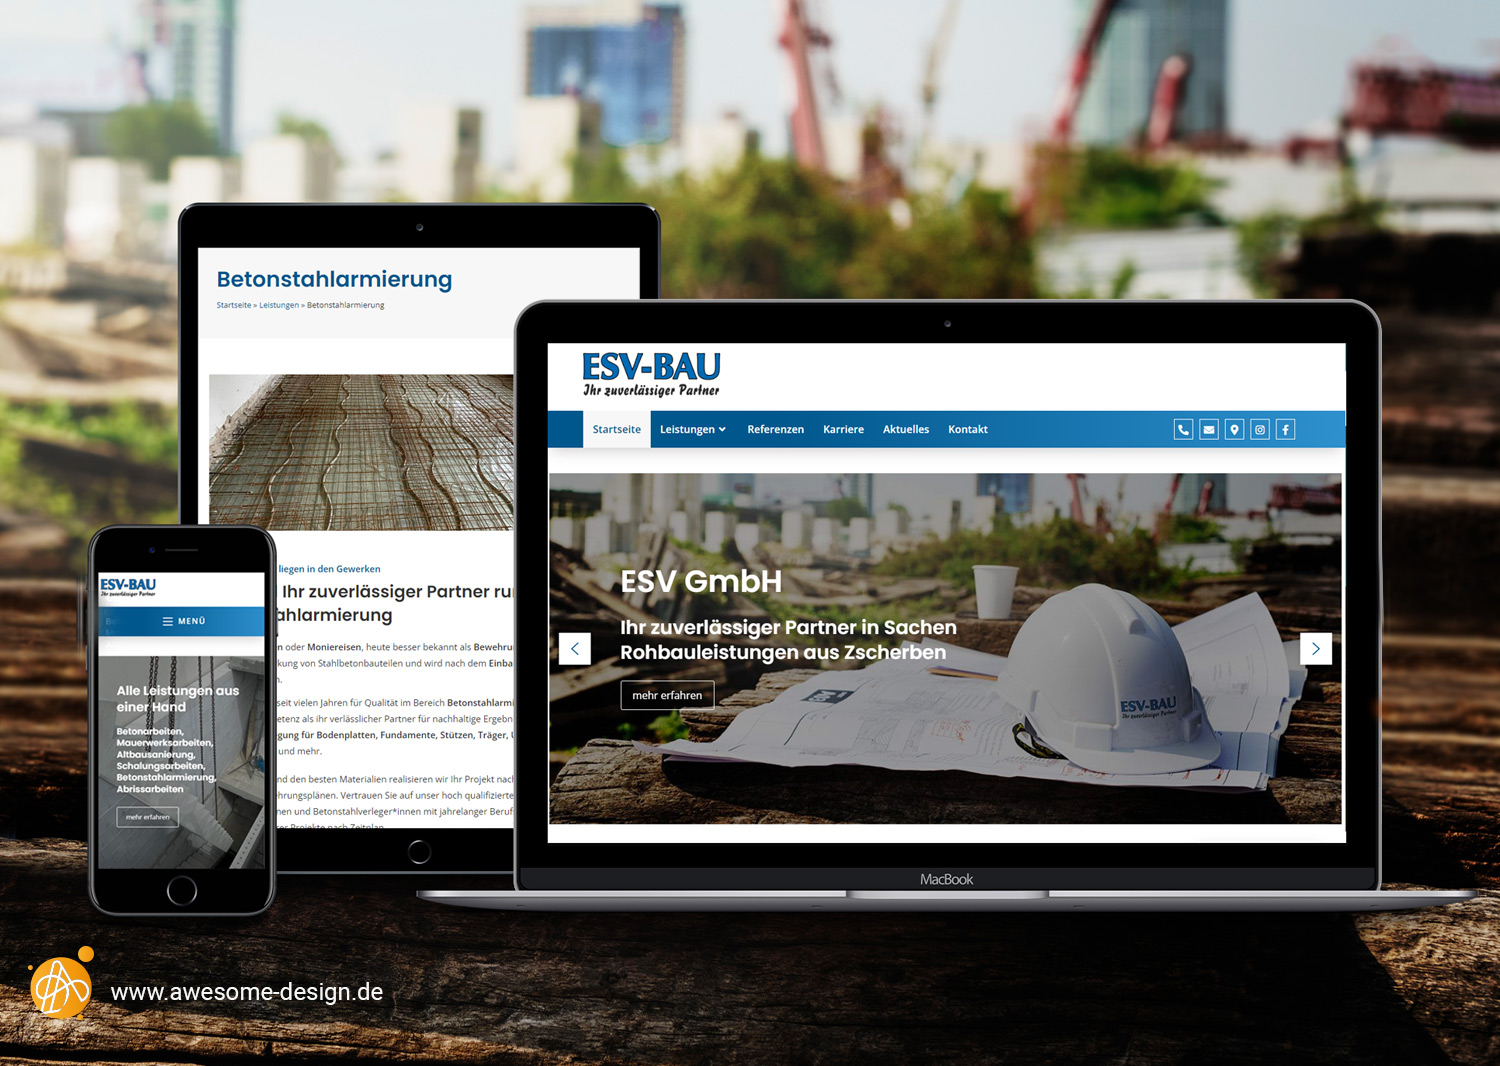 Webdesign - ESV Bau | Awesome Design